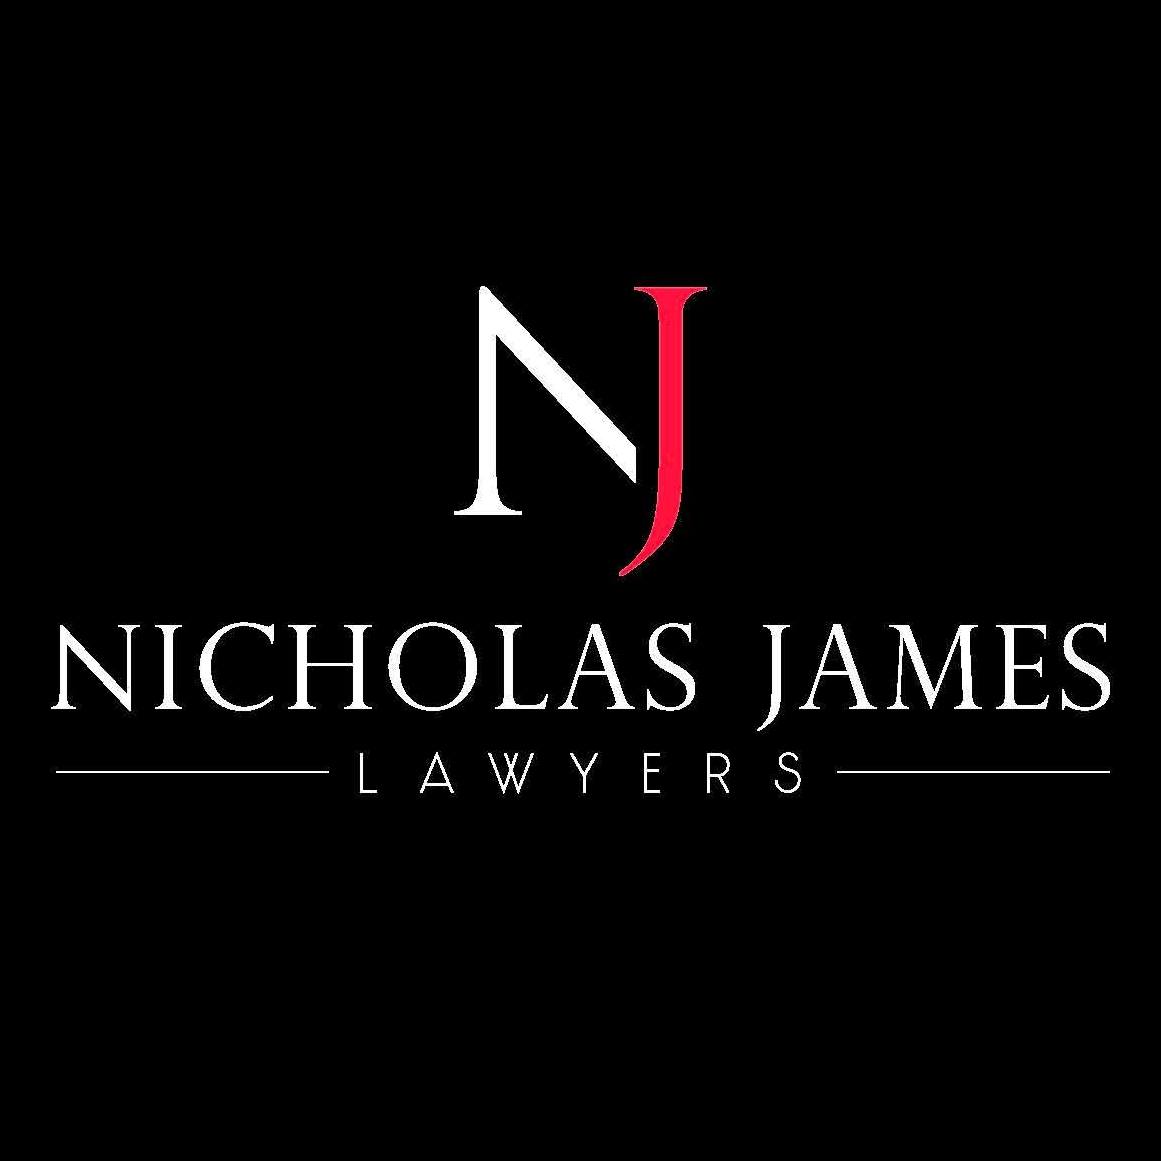 NJ Lawyers